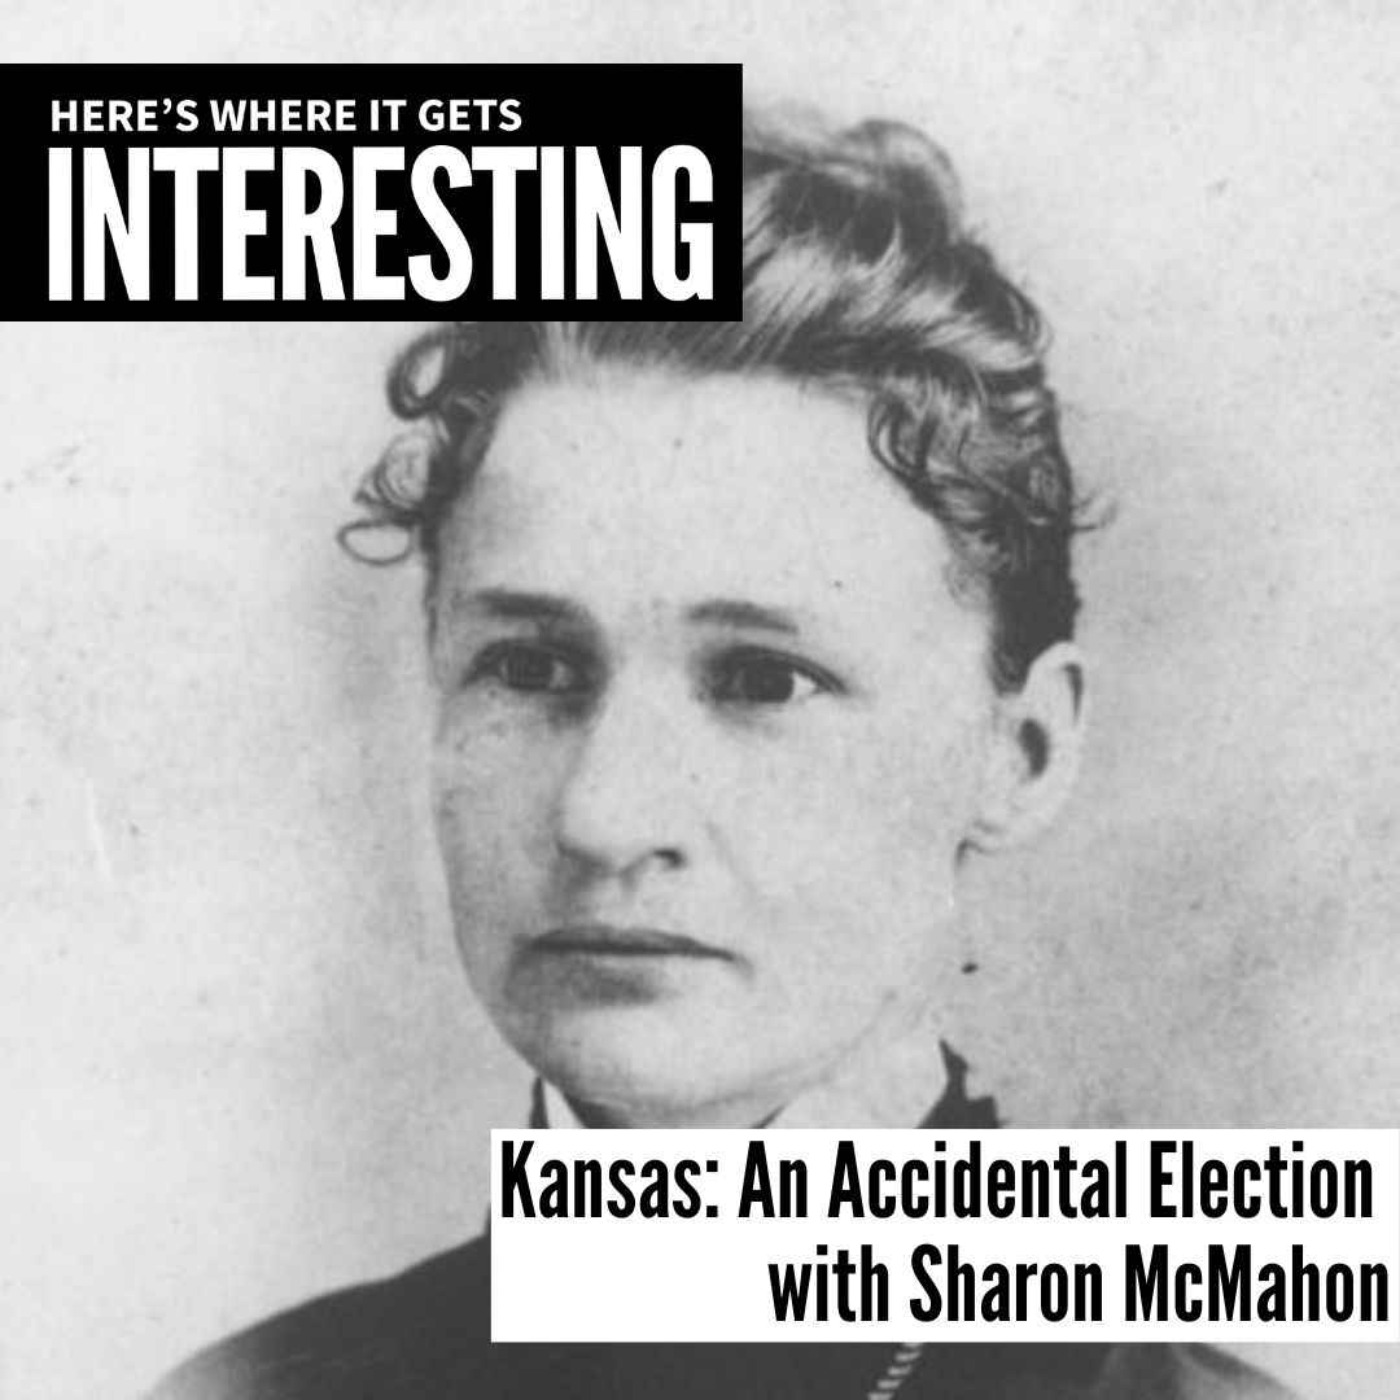 Kansas: An Accidental Election with Sharon McMahon